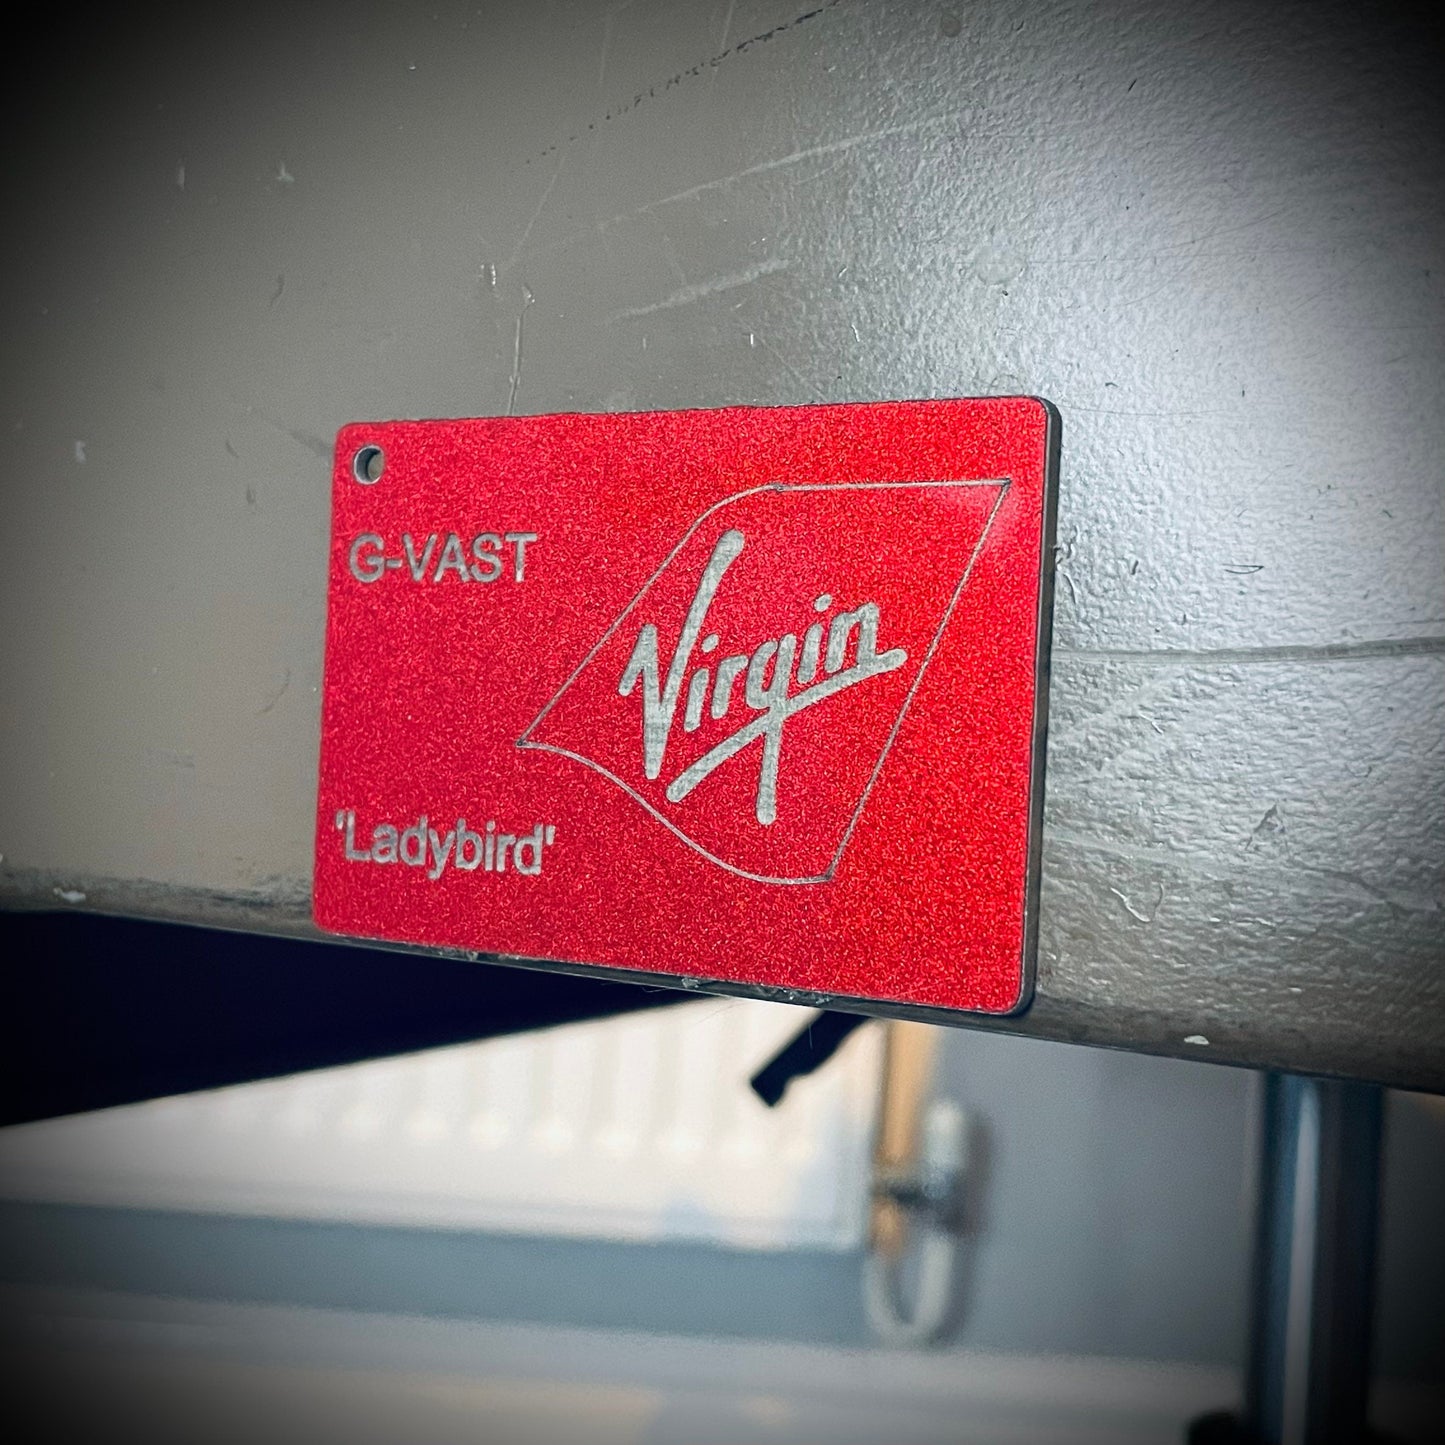 Virgin Atlantic Boeing 747 G-VAST Cockpit First Observer Jumpseat Upcycled Office Desk Chair Captain Officer